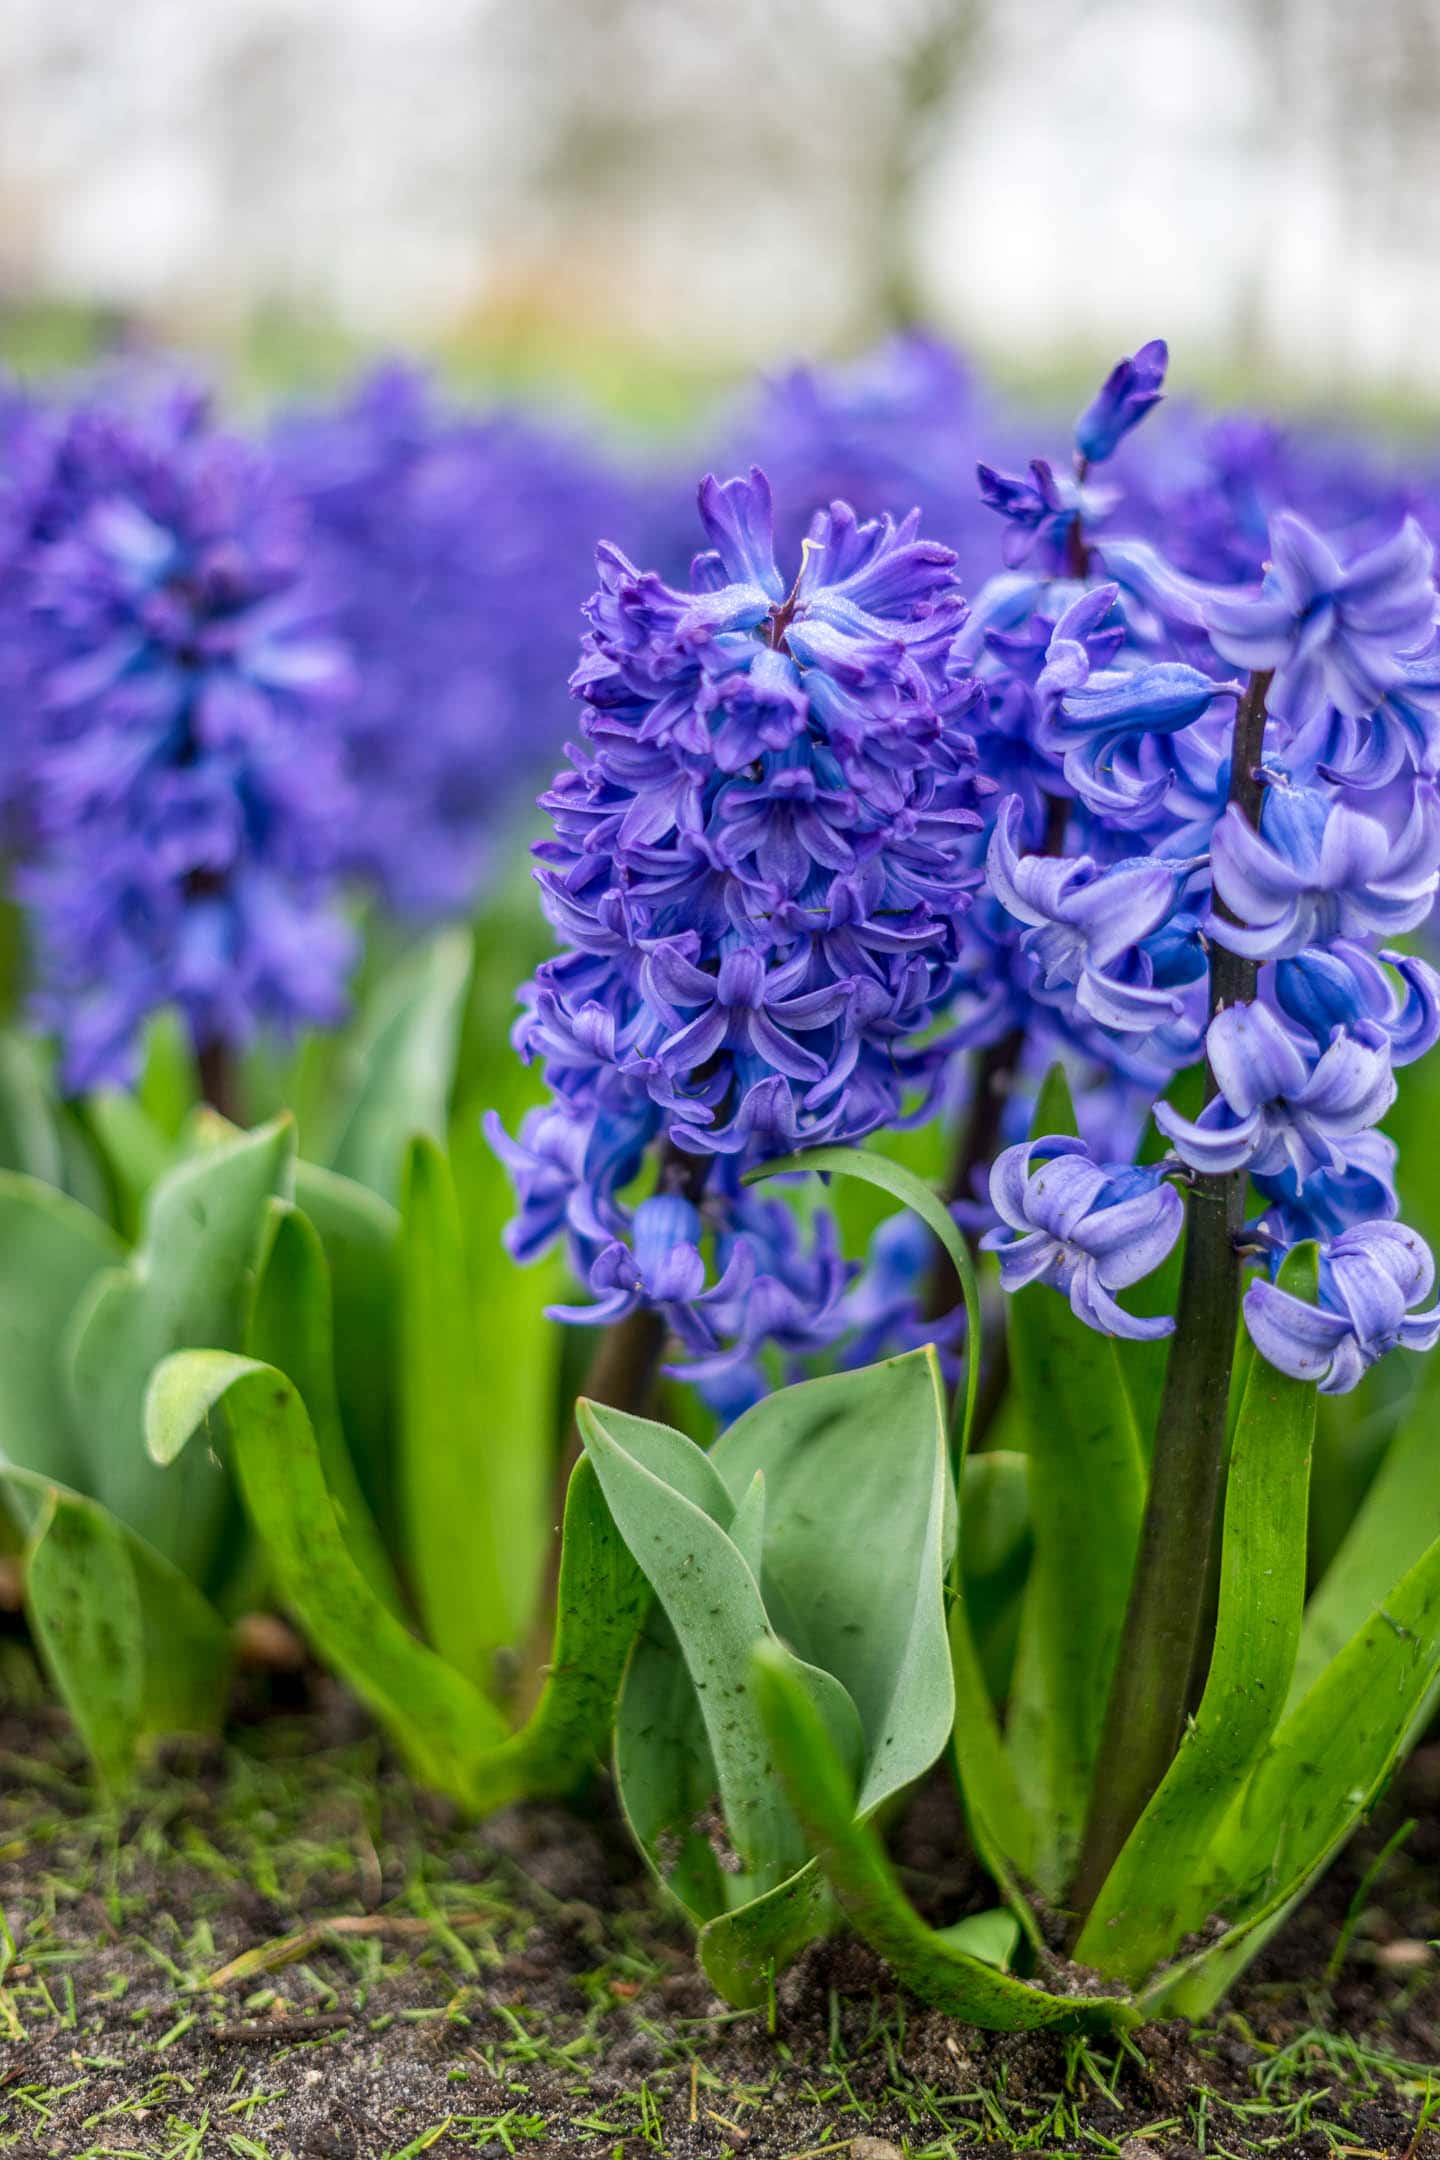 Hyacinth 'Delft Blue' flowers